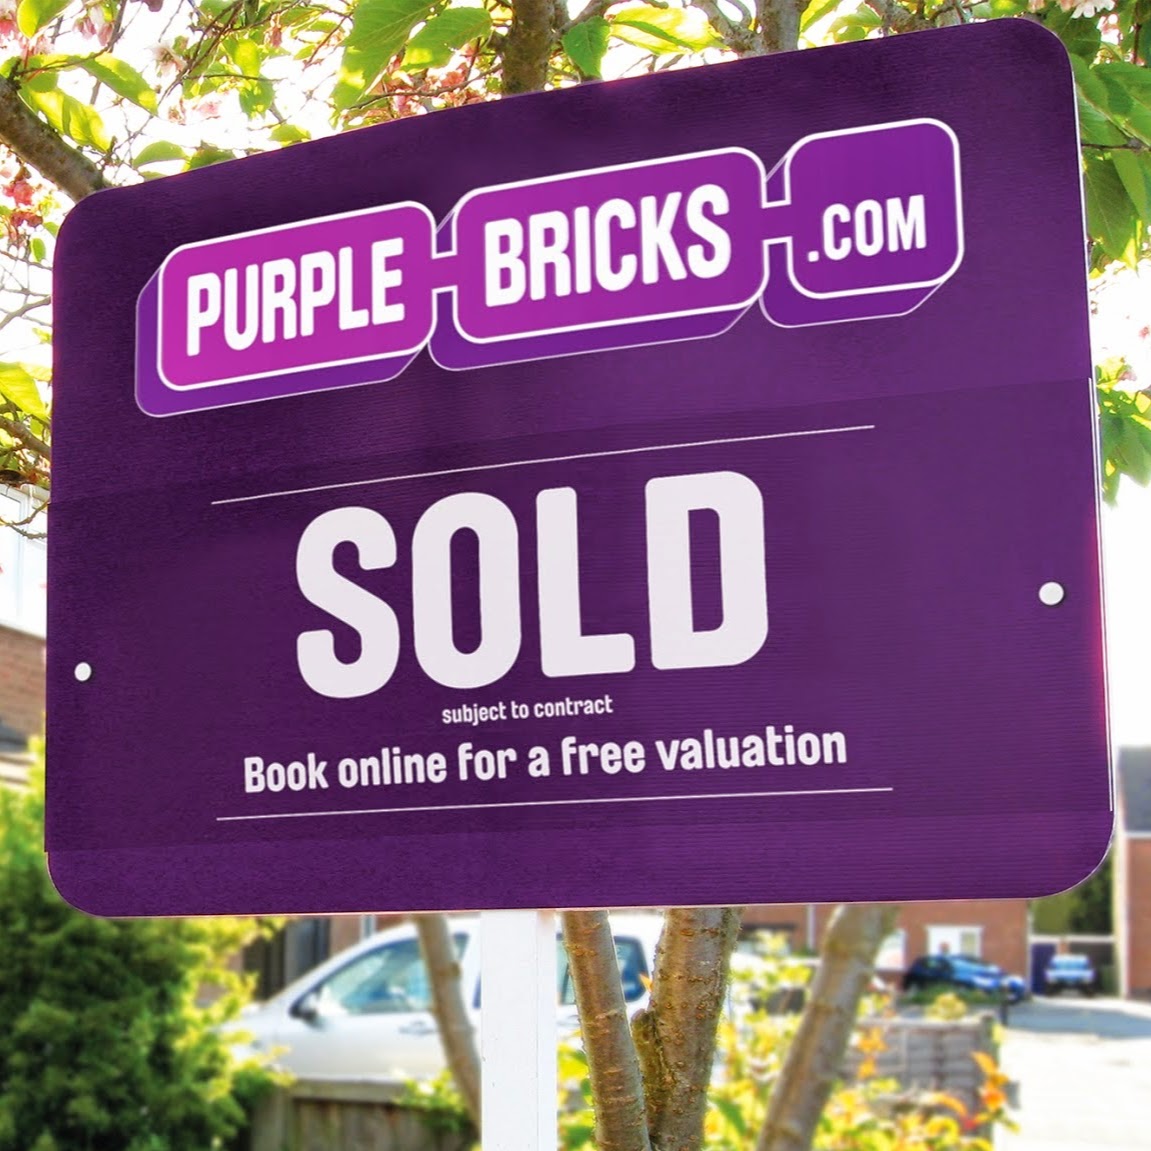 Purplebricks sold sign image